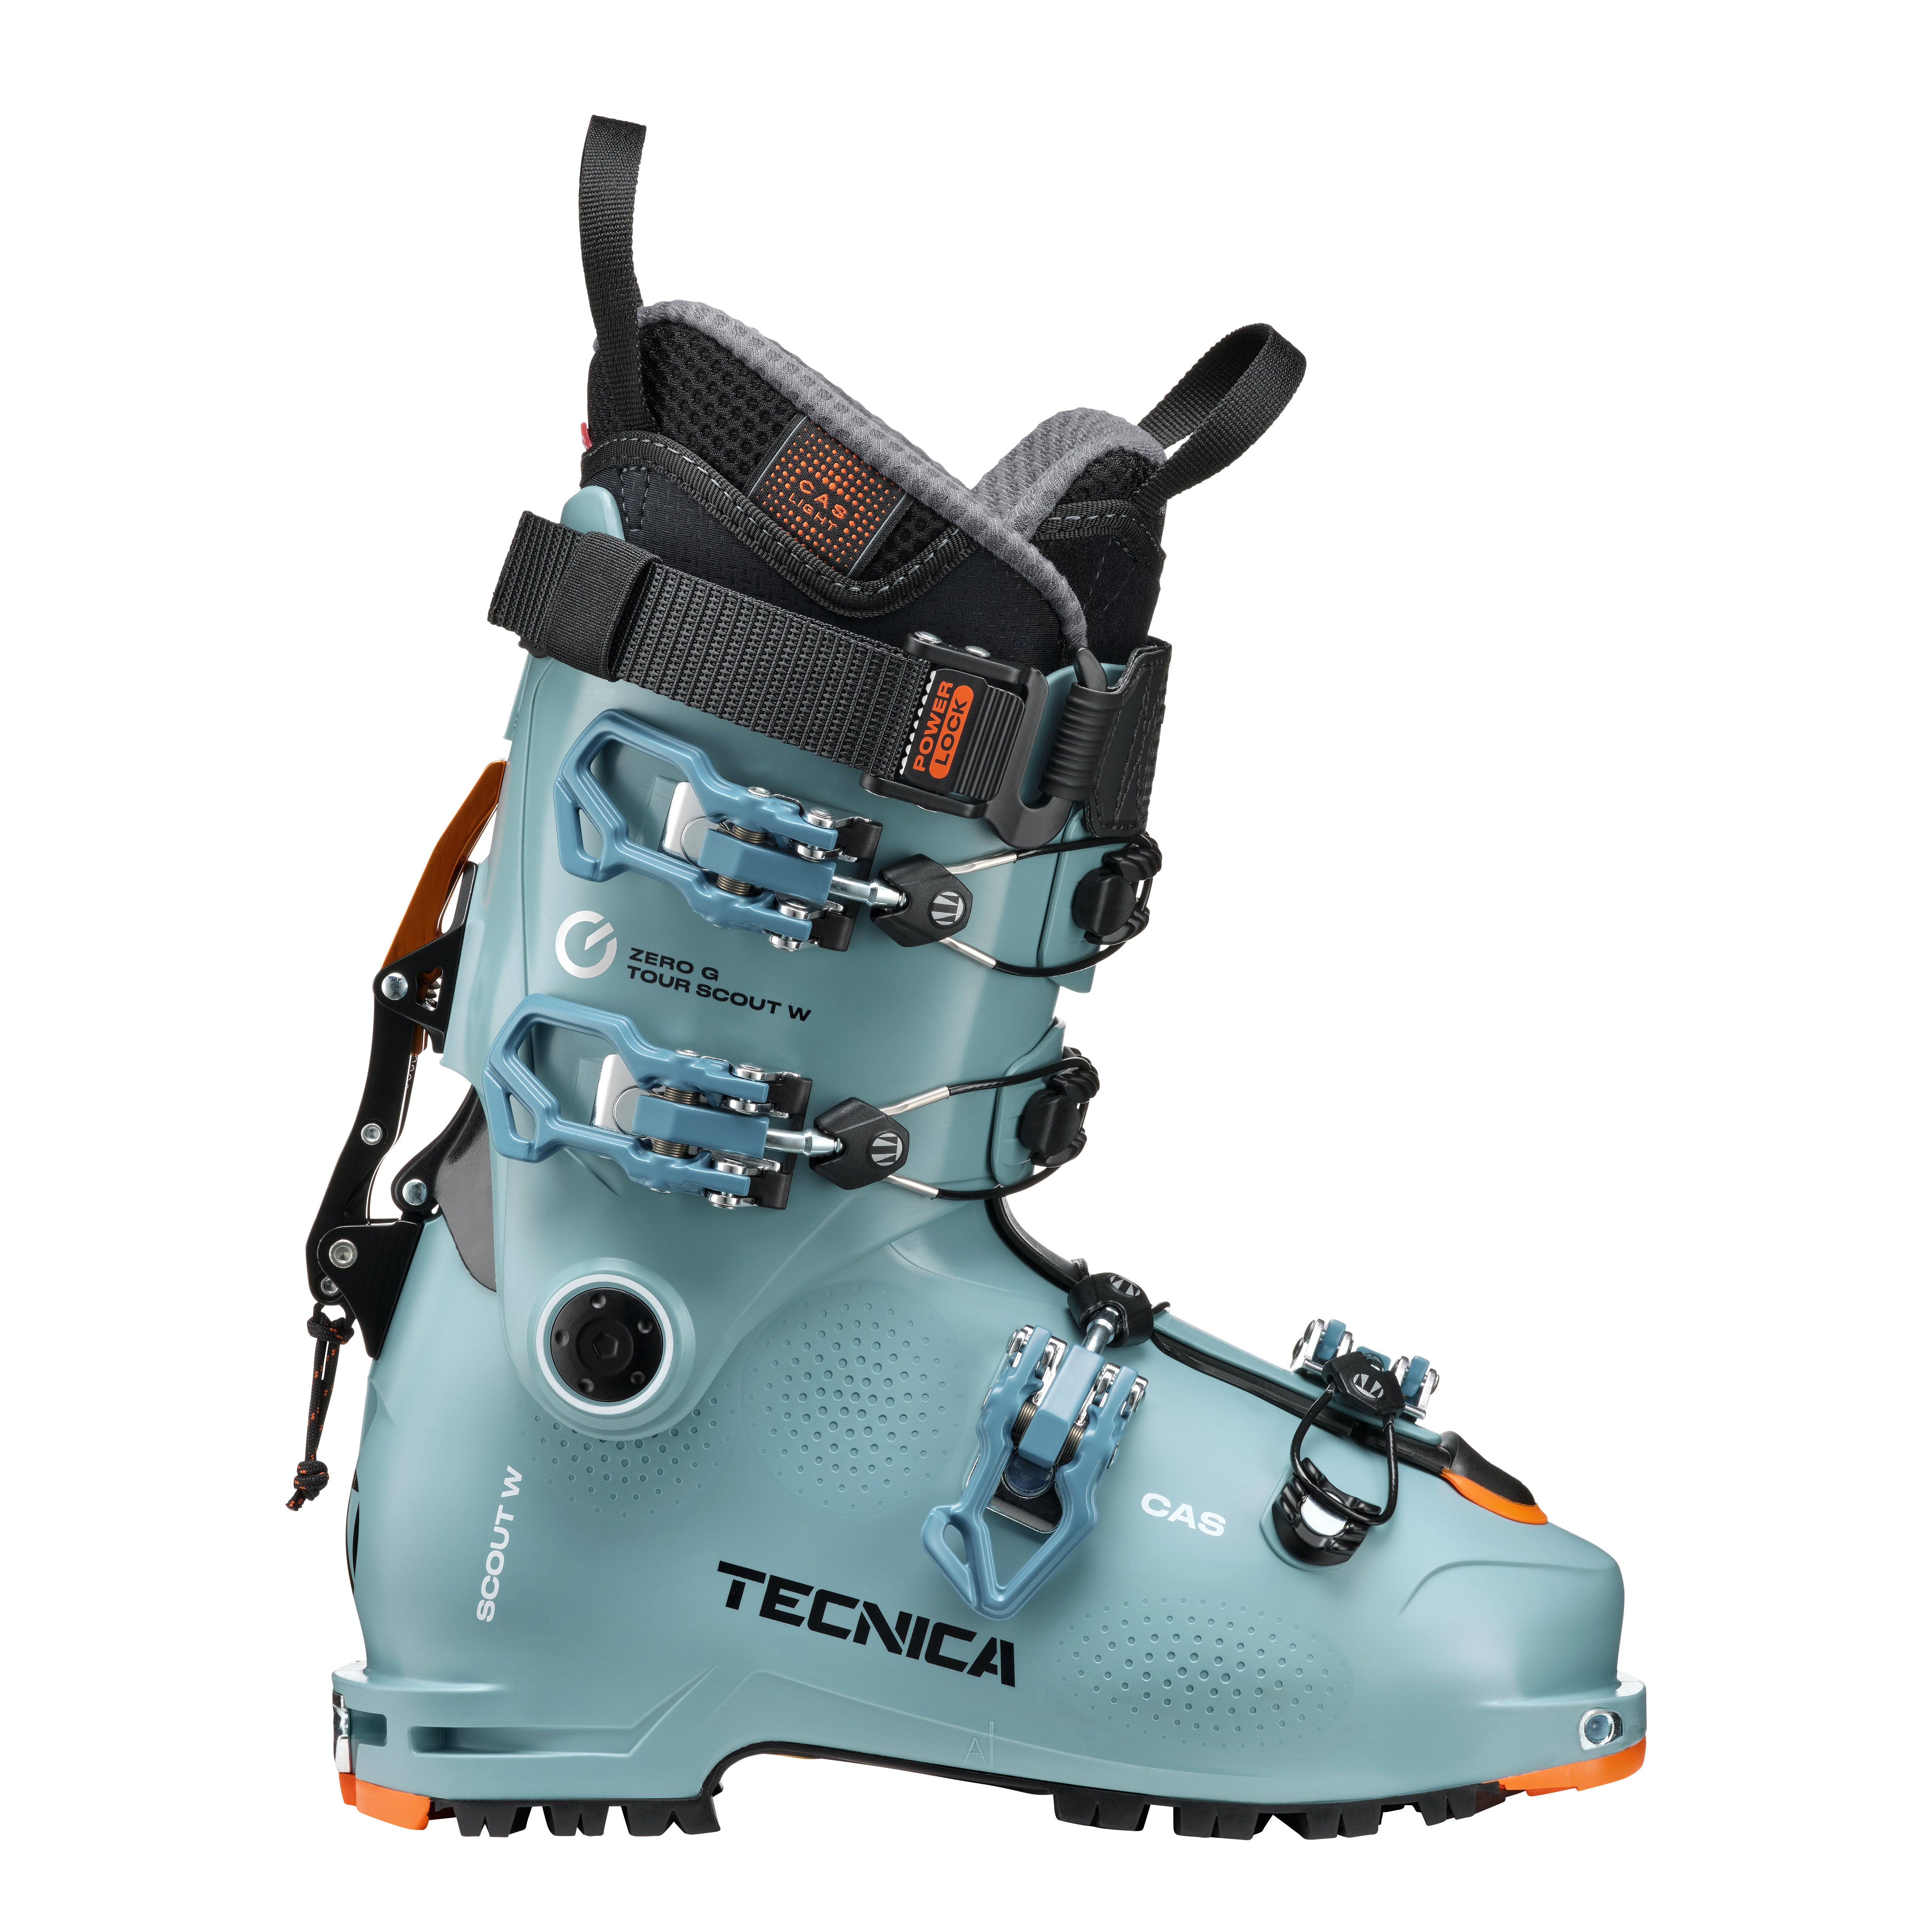 Women's Tecnica Zero G Tour Scout frosty blue ski boot with minimal orange accents.